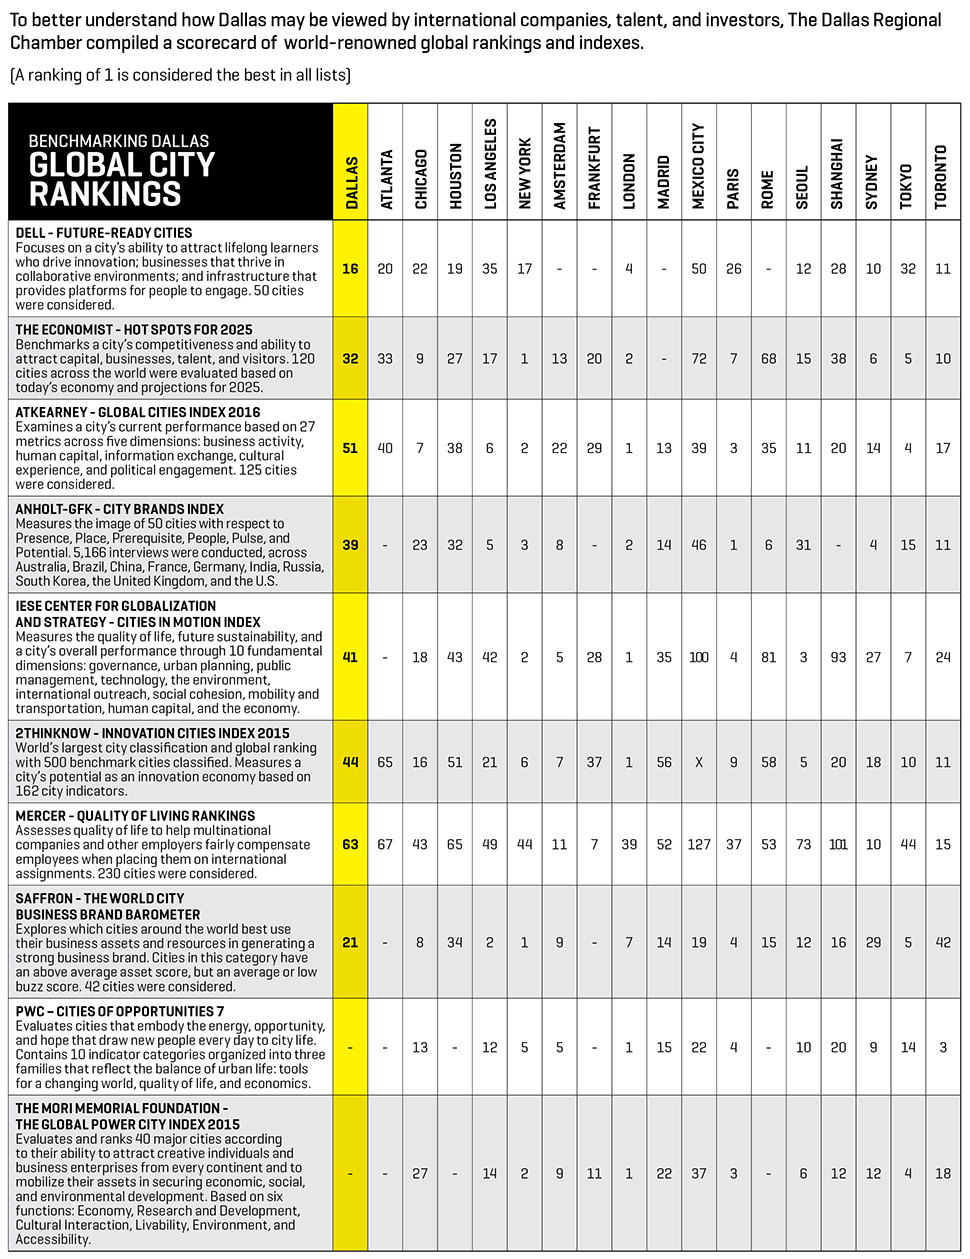 Global City Rankings, The Dallas Regional Chamber